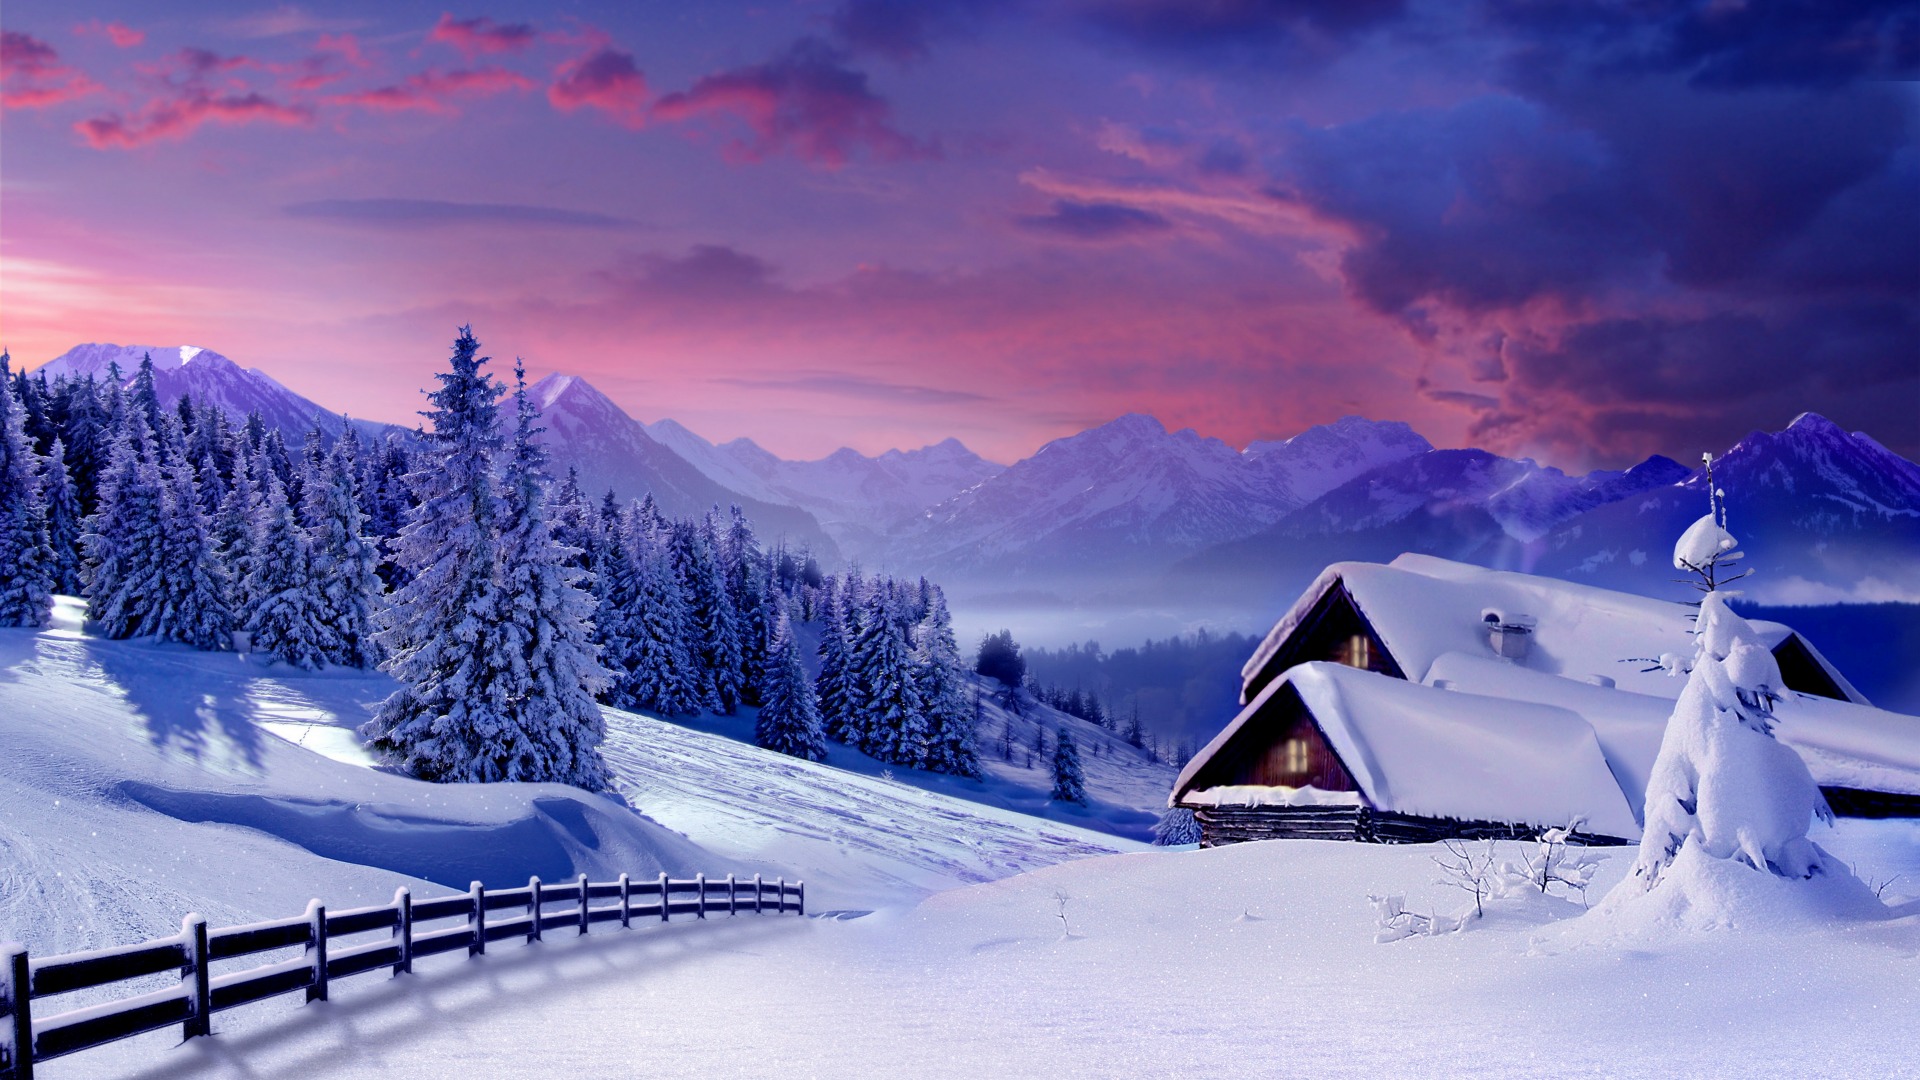 Winter, snow, hut, fence, trees, winter landscape pictures, landscape wallpapers